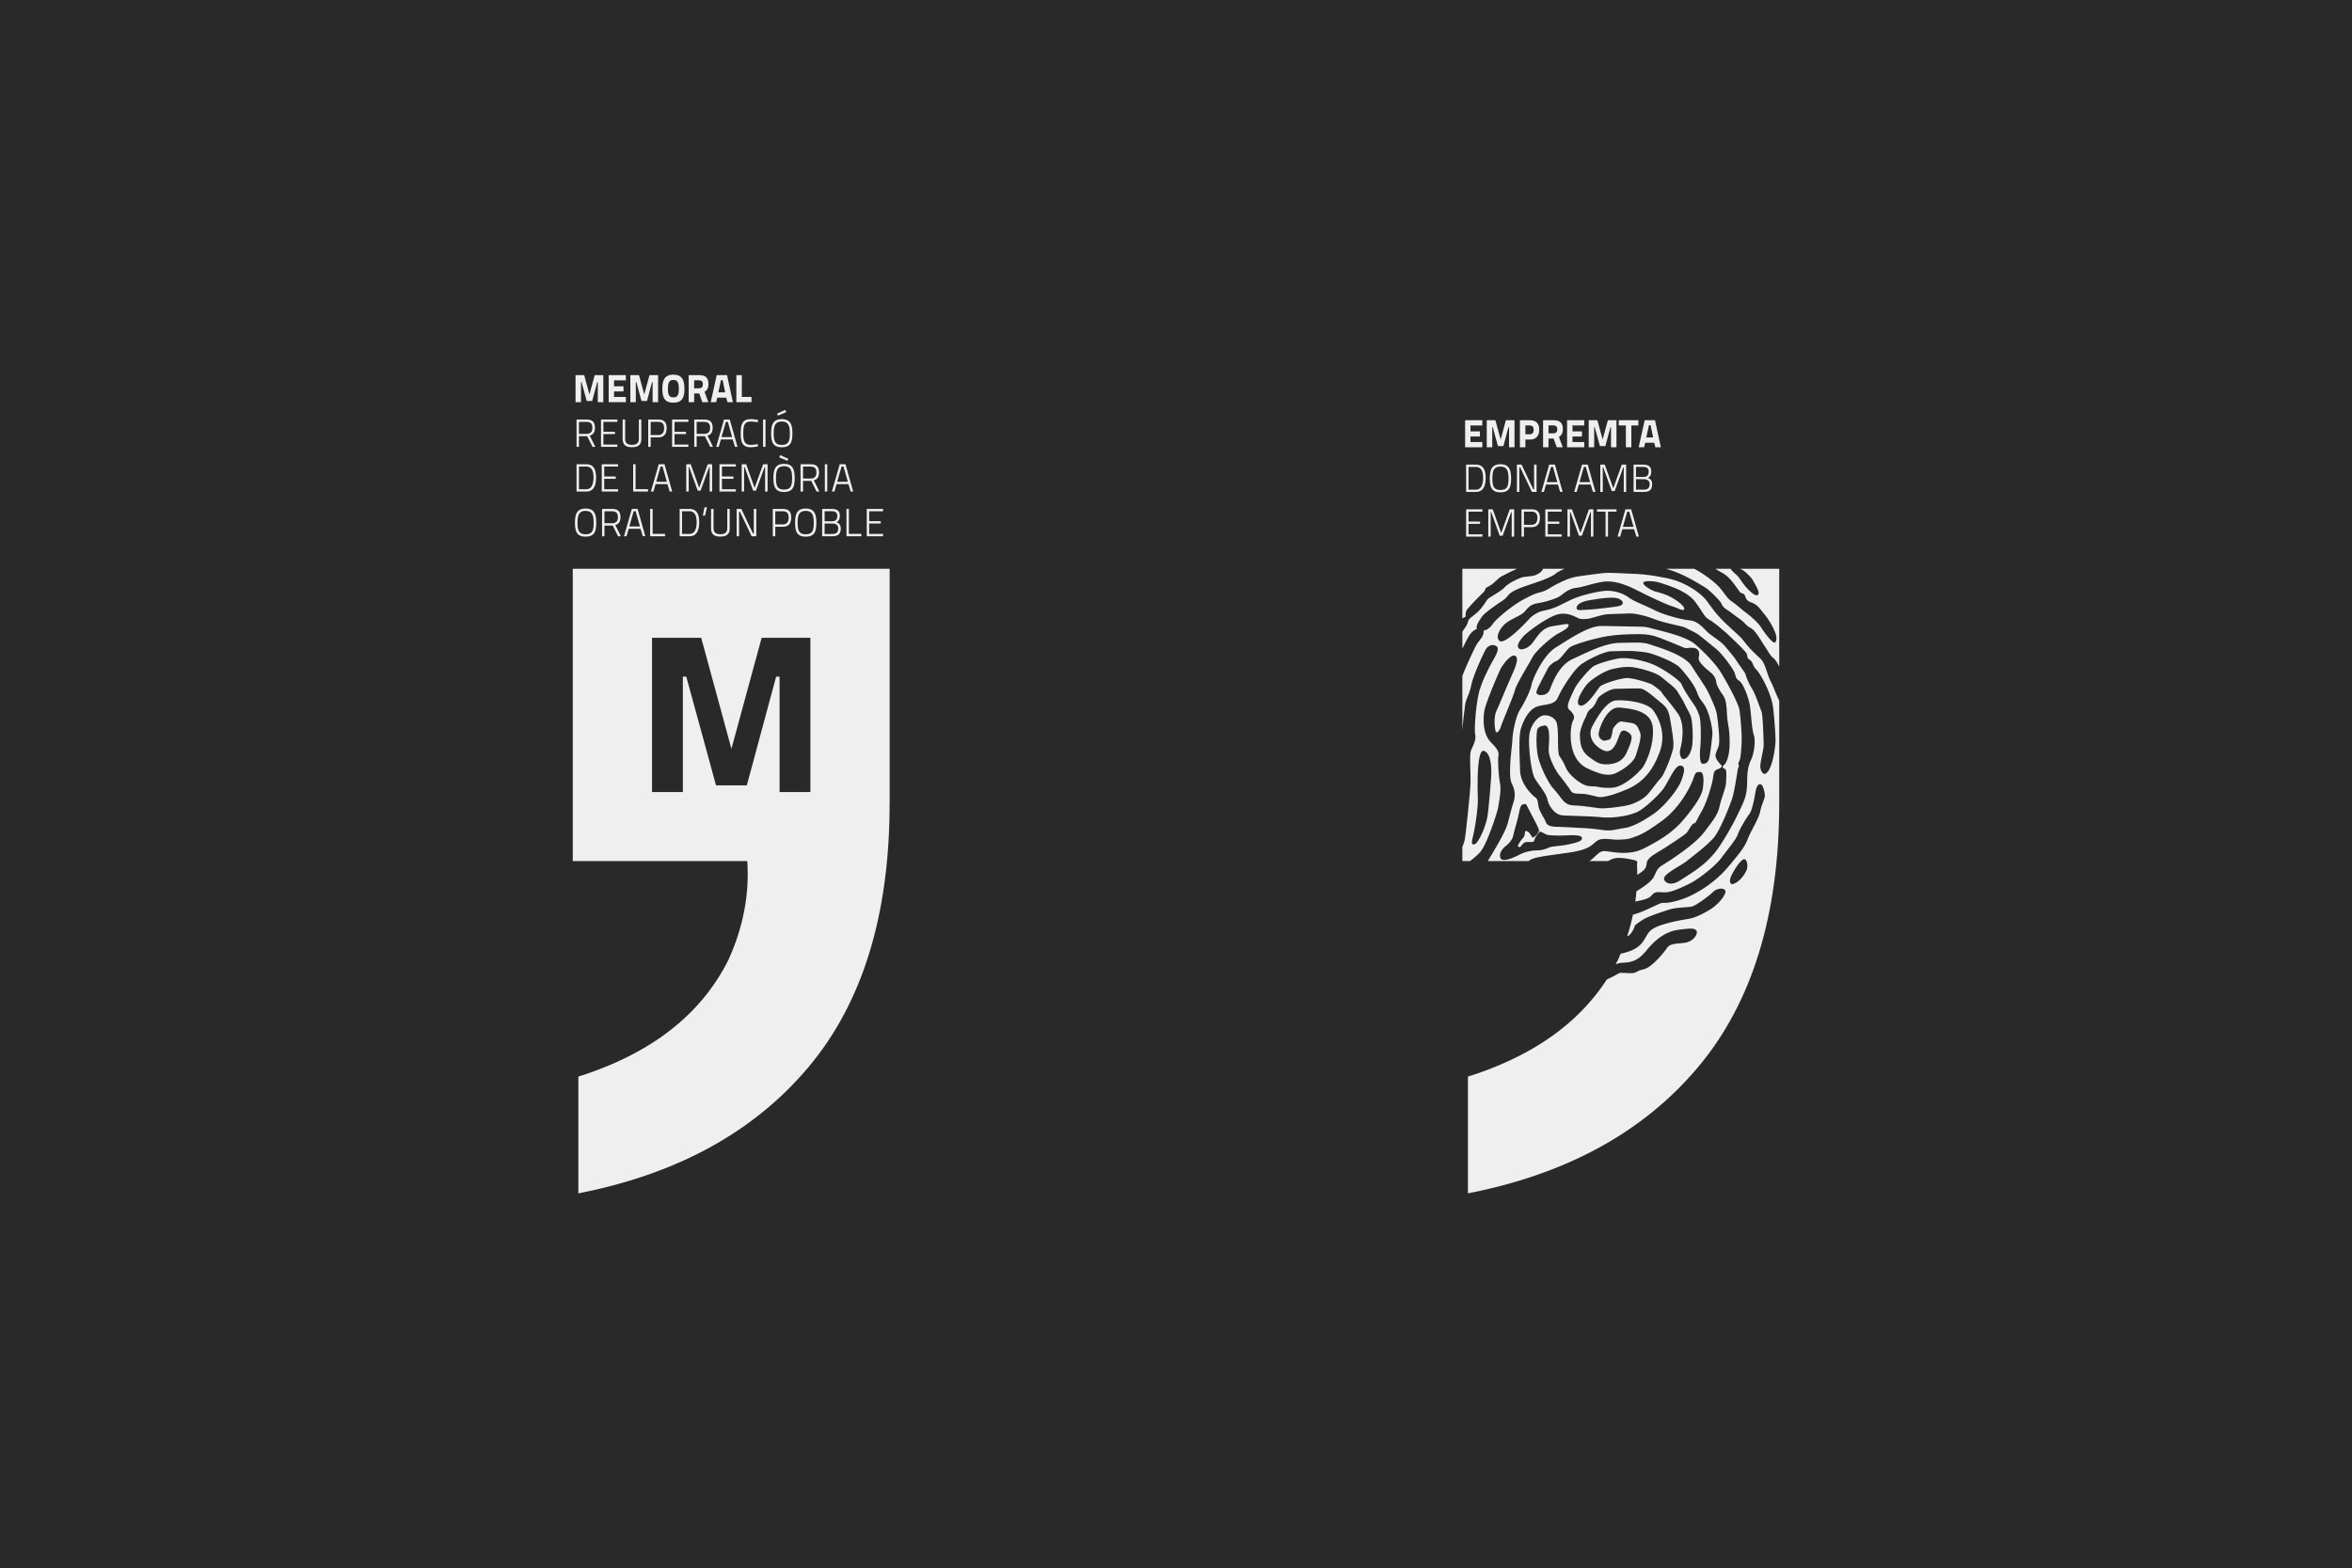 Porta-Disseny-Logos-Projecte-Memoral-01